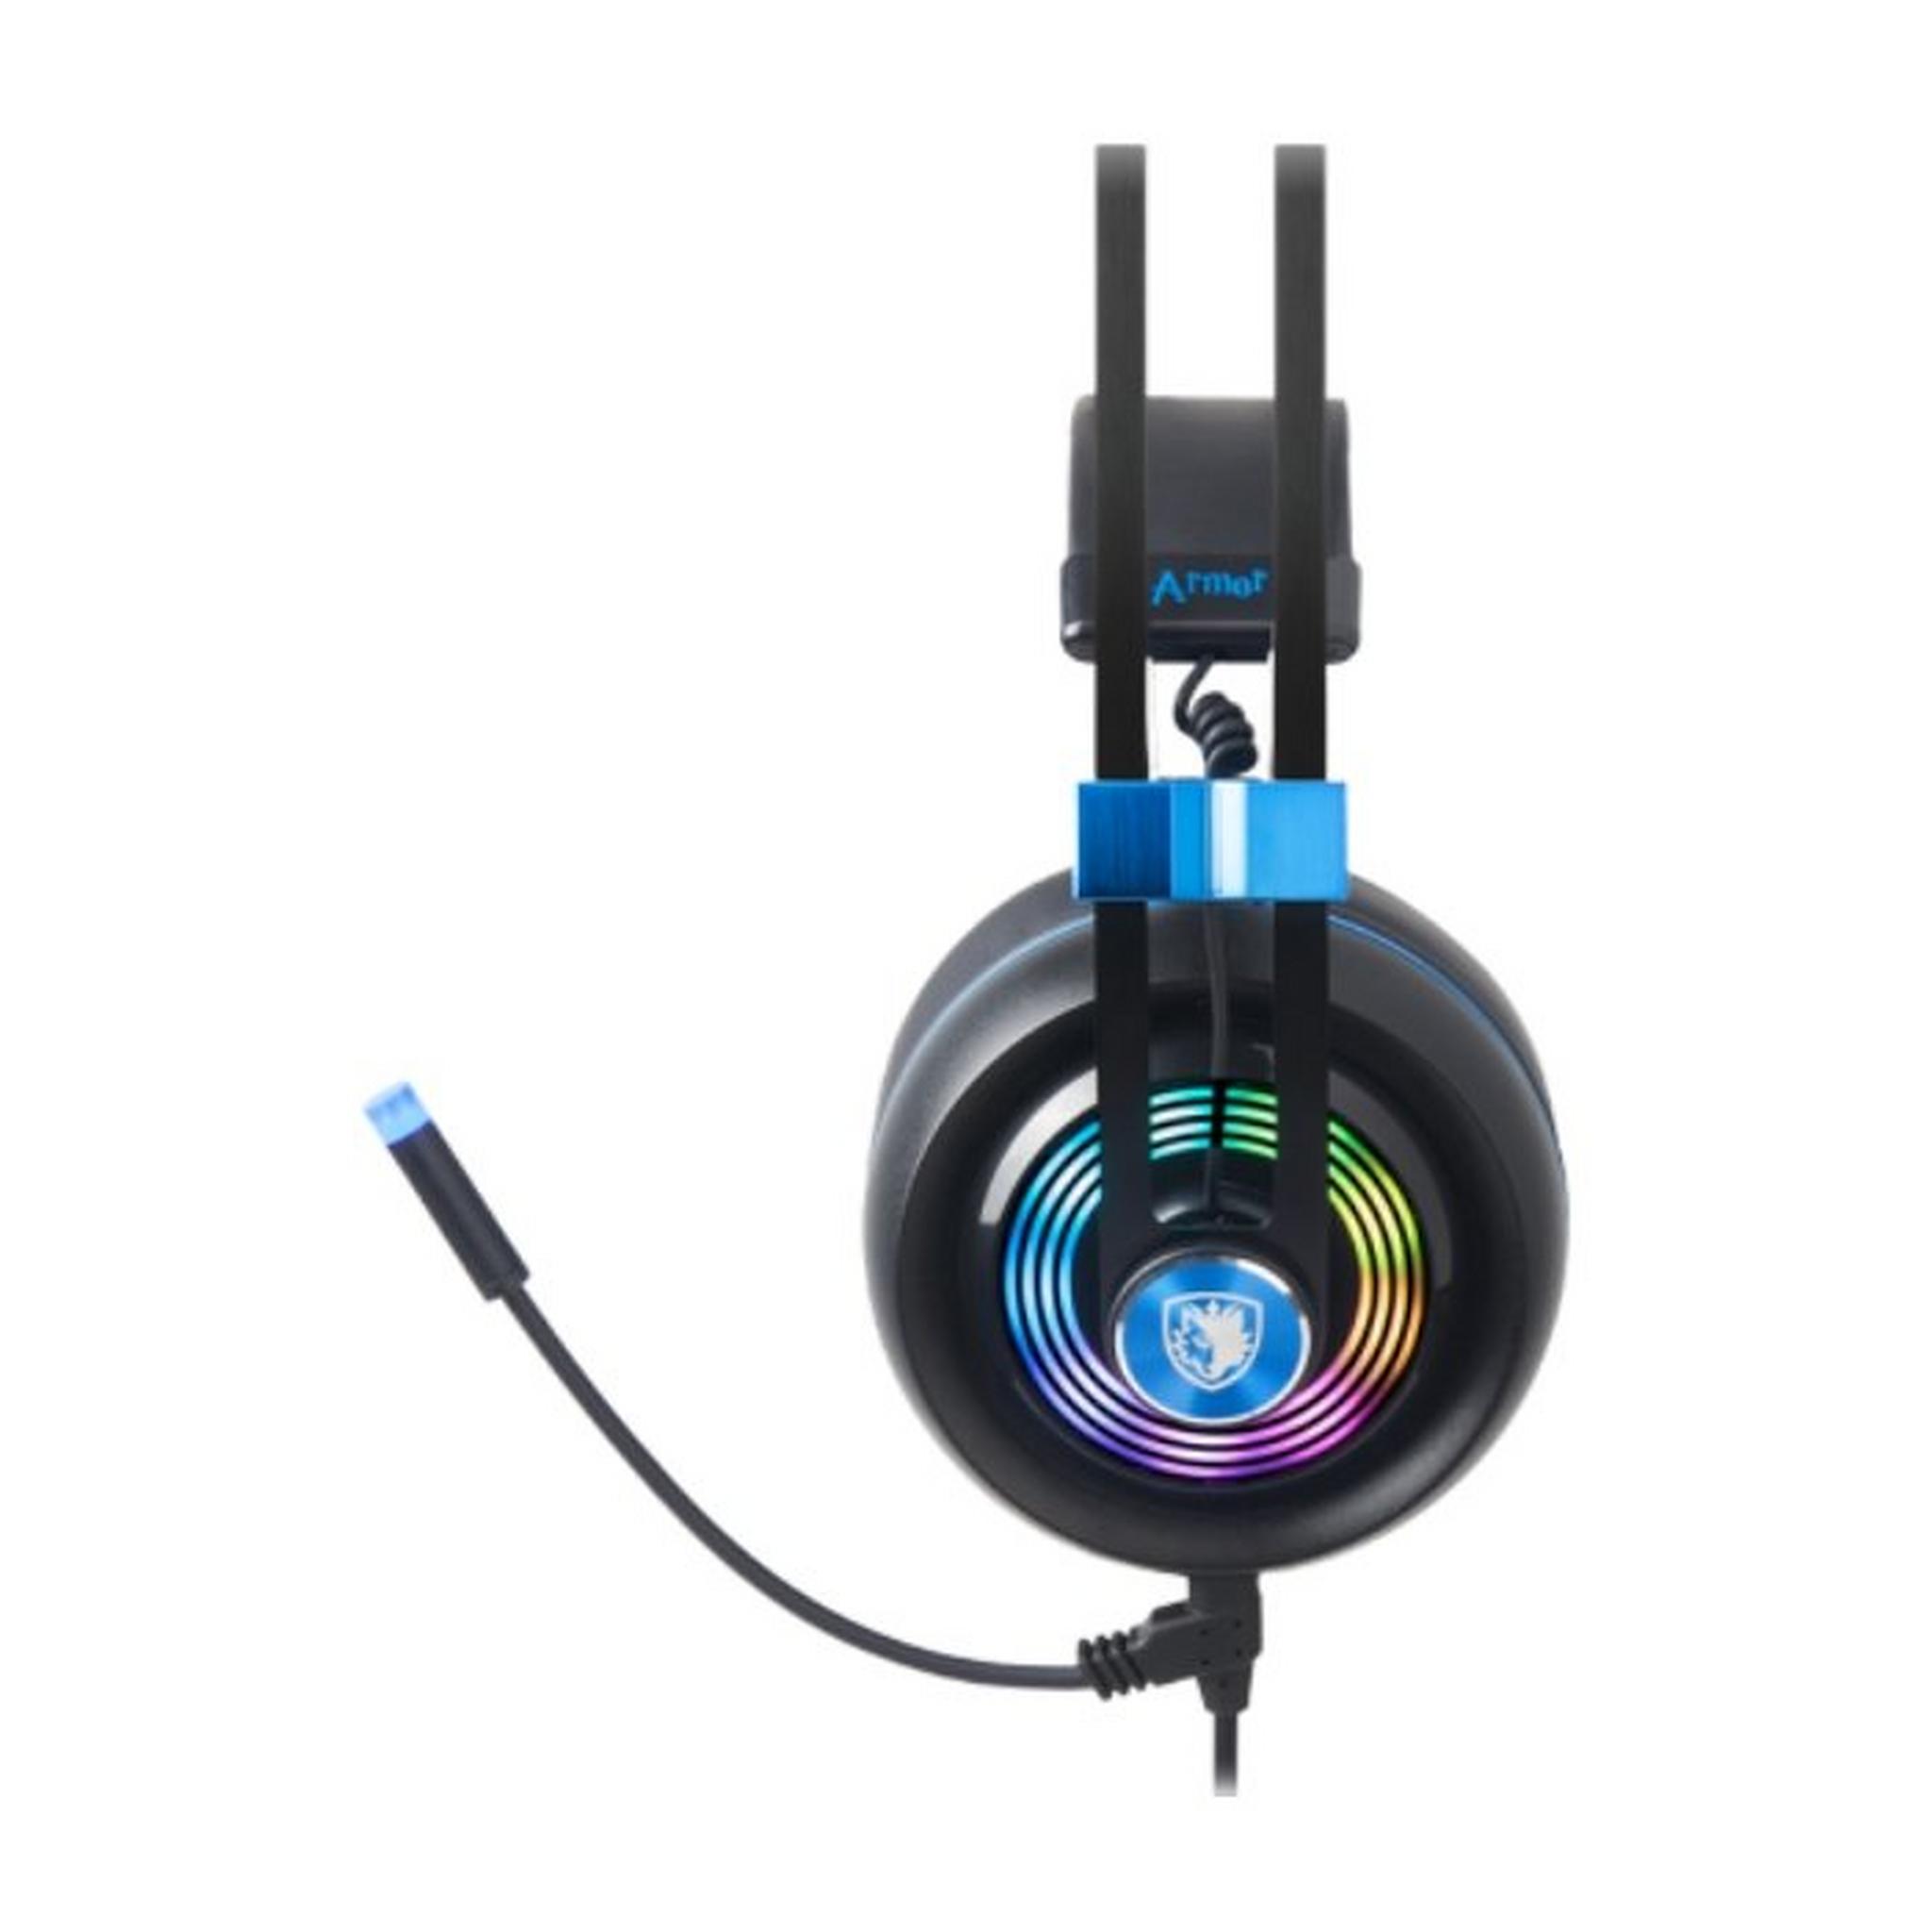 Sades Armor RGB Wired Gaming Headset - Black/Blue -SA-908